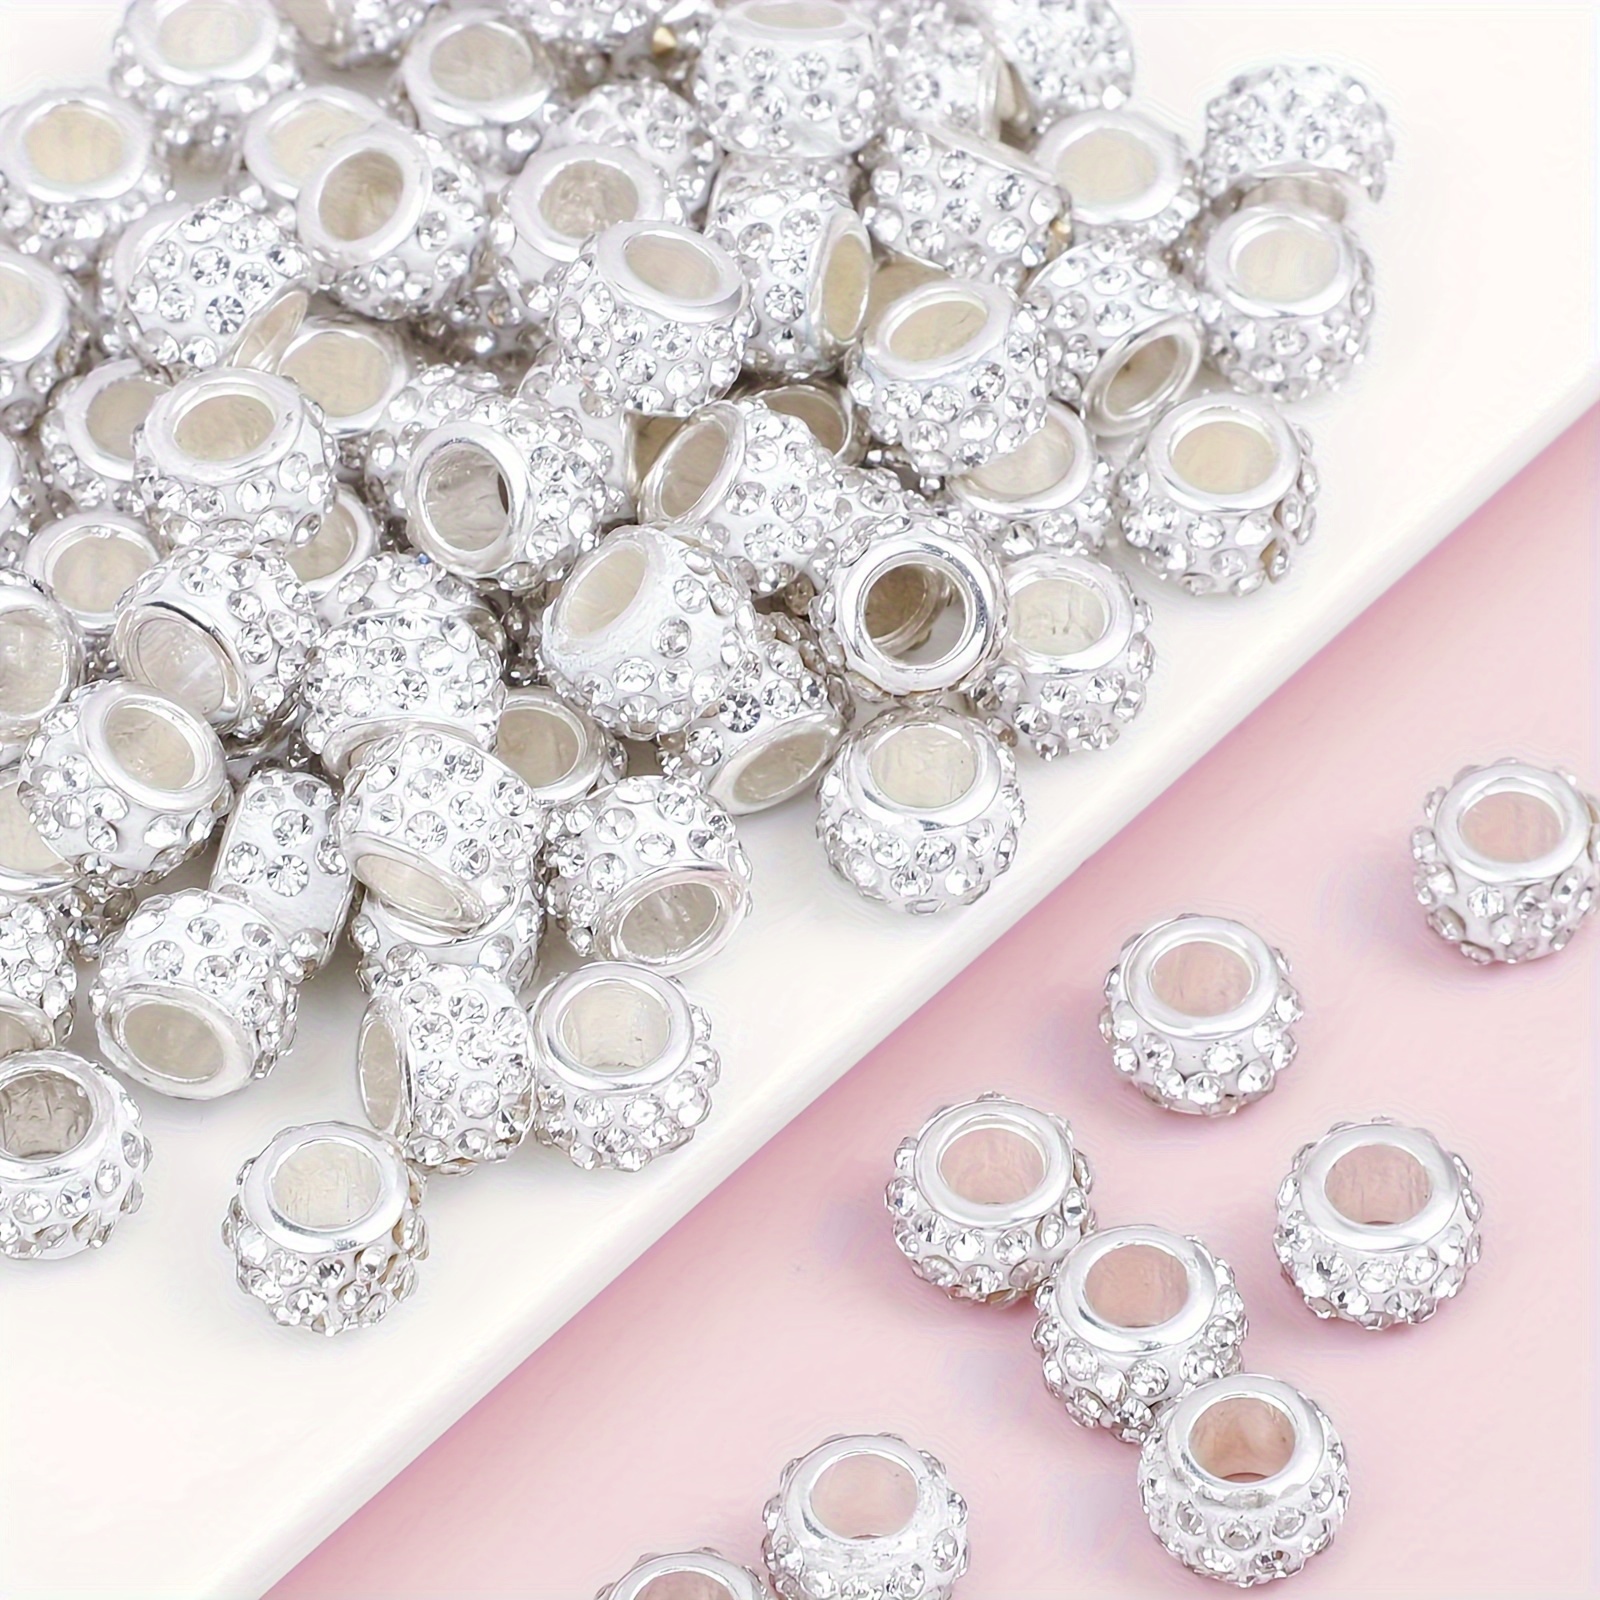 

100pcs White Rhinestones Crystal Large Hole Beads For Jewelry Making Diy Charm Bracelet Necklace Handmade Craft Supplies